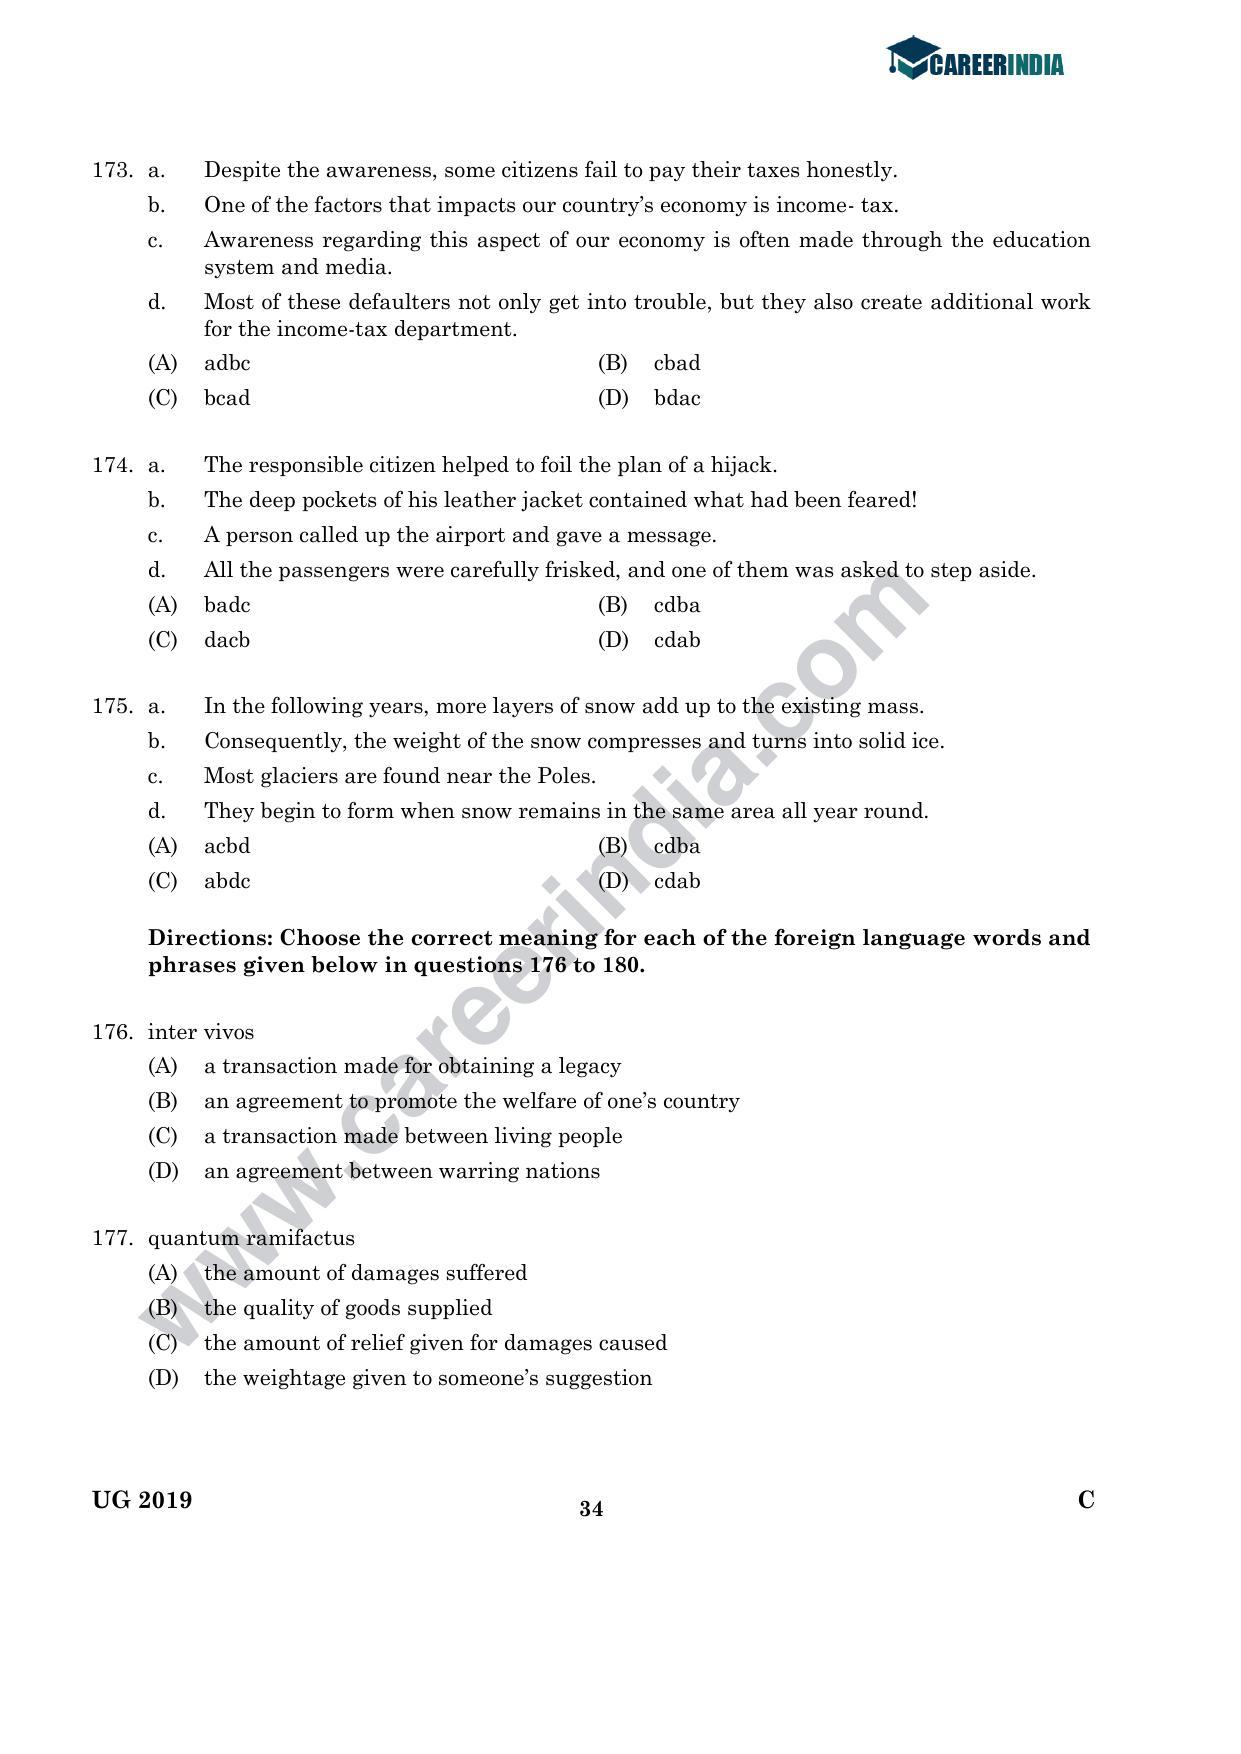 CLAT 2019 UG Legal-Aptitude Question Paper - Page 33